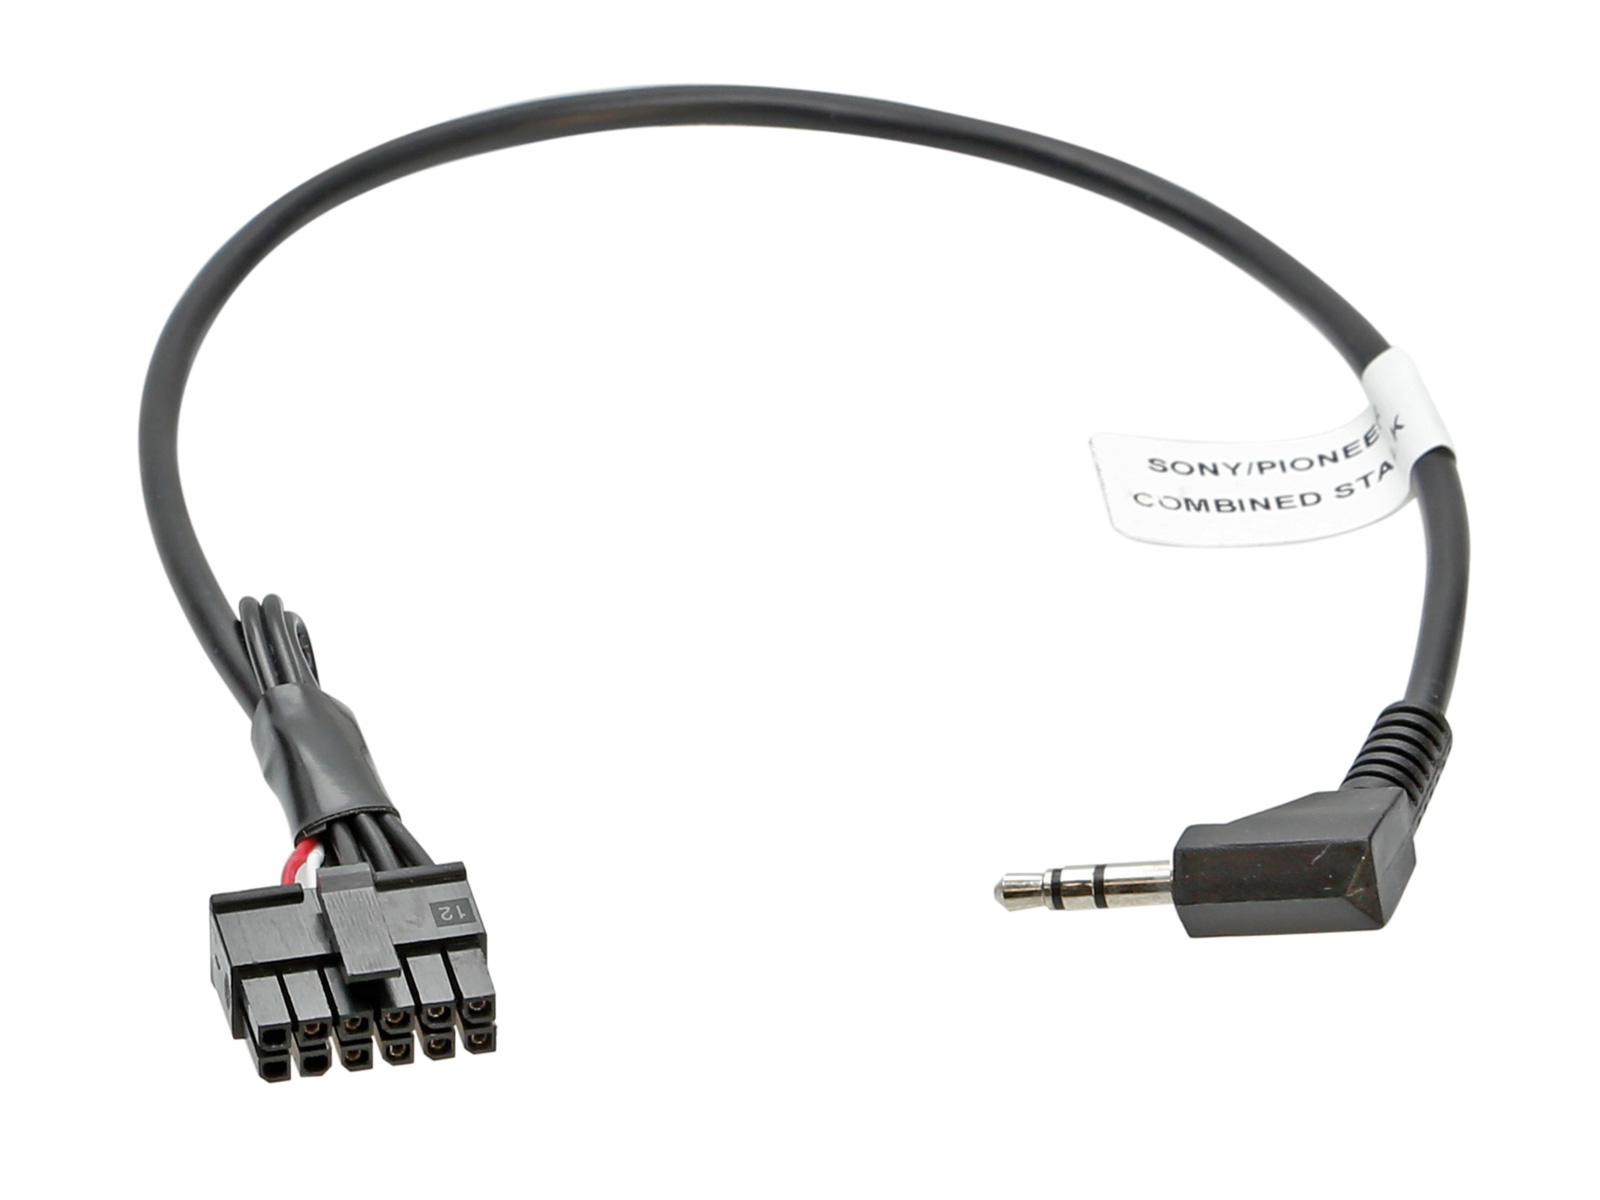 ACV Adapterkabel (blaue Box) und Connects2 Lenkradinterface adaptiert auf Sony